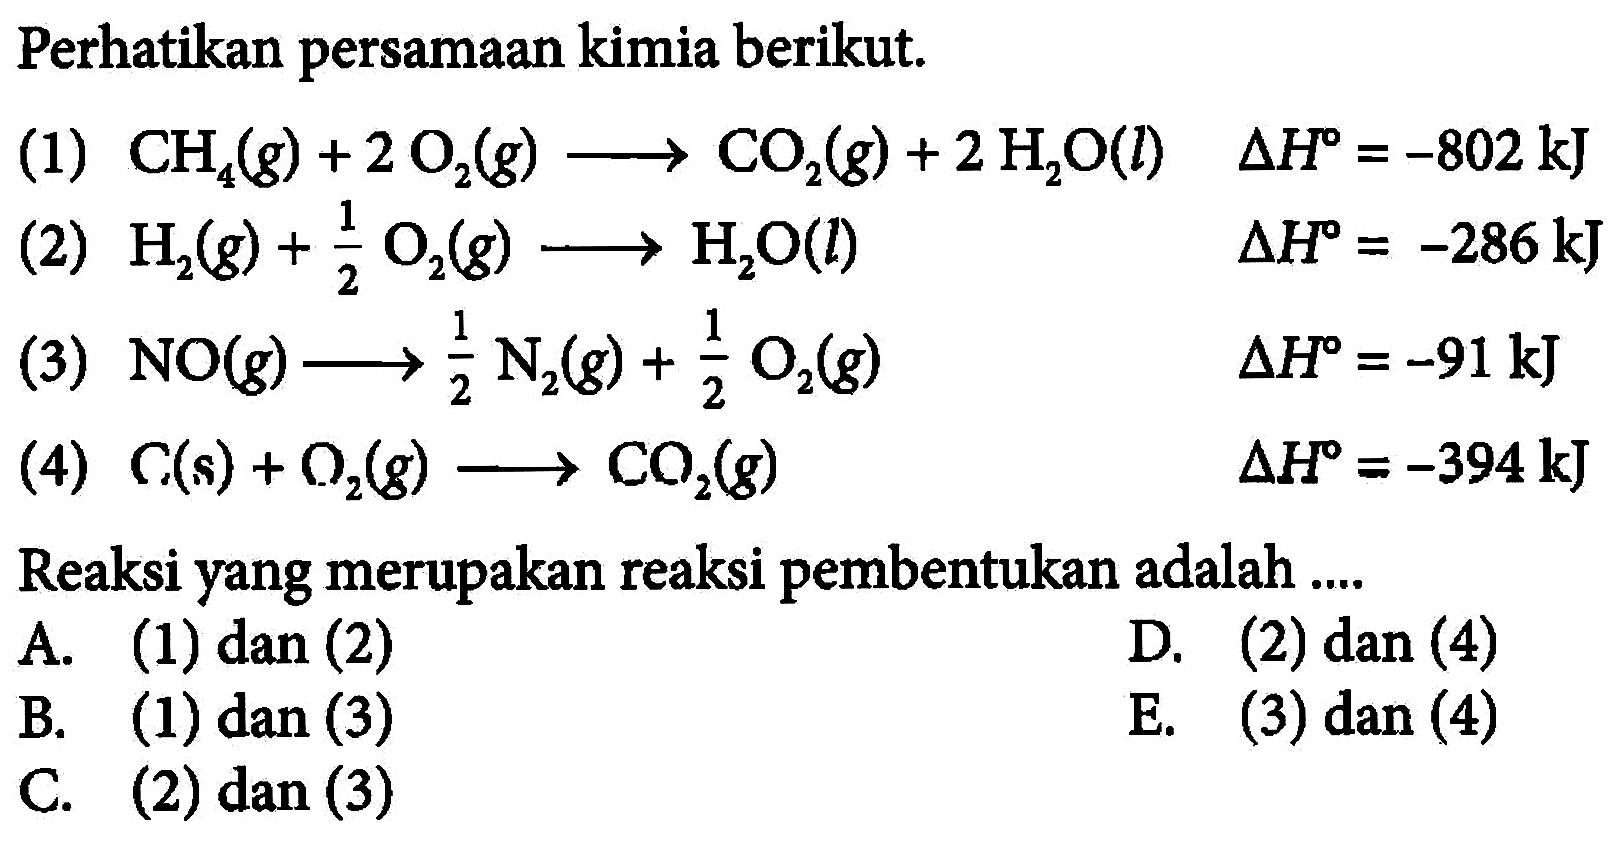 Perhatikan persamaan kimia berikut.(1) CH4(g)+2O2(g) -> CO2(g)+2H2O(l) delta H=-802 kJ (2) H2(g)+1/2O2(g) -> H2O(l) delta H=-286 kJ (3) NO(g) -> 1/2N2(g)+1/2O2(g) delta H=-91 kJ (4) C(s)+O2(g) -> CO2(g) delta H=-394 kJ Reaksi yang merupakan reaksi pembentukan adalah .... A. (1) dan (2) B. (1) dan (3) C. (2) dan (3) D. (2) dan (4) E. (3) dan (4) 